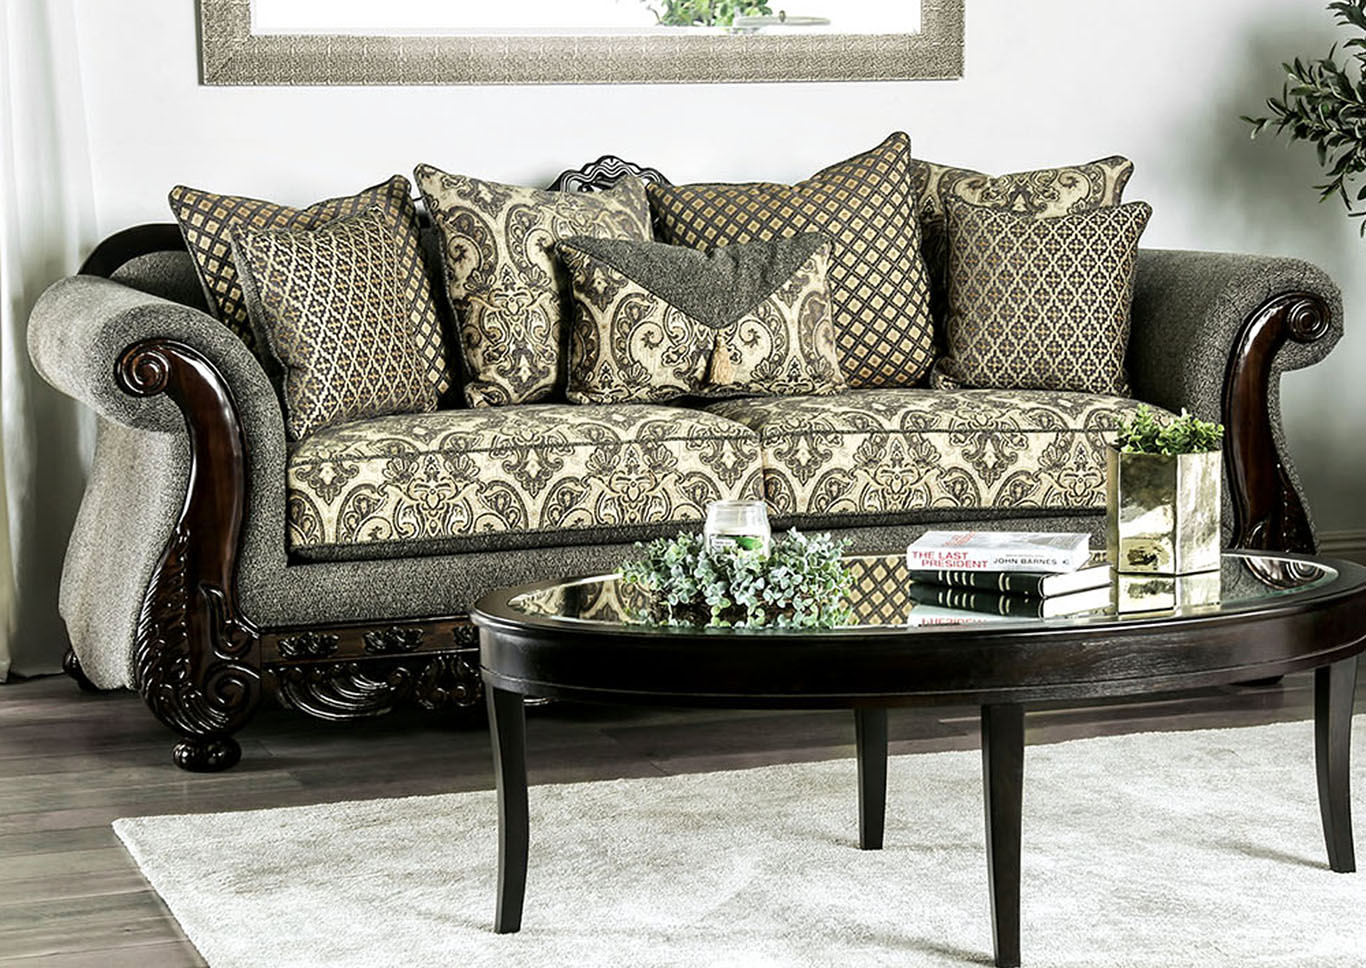 Justina Gray Sofa and Loveseat,Furniture of America